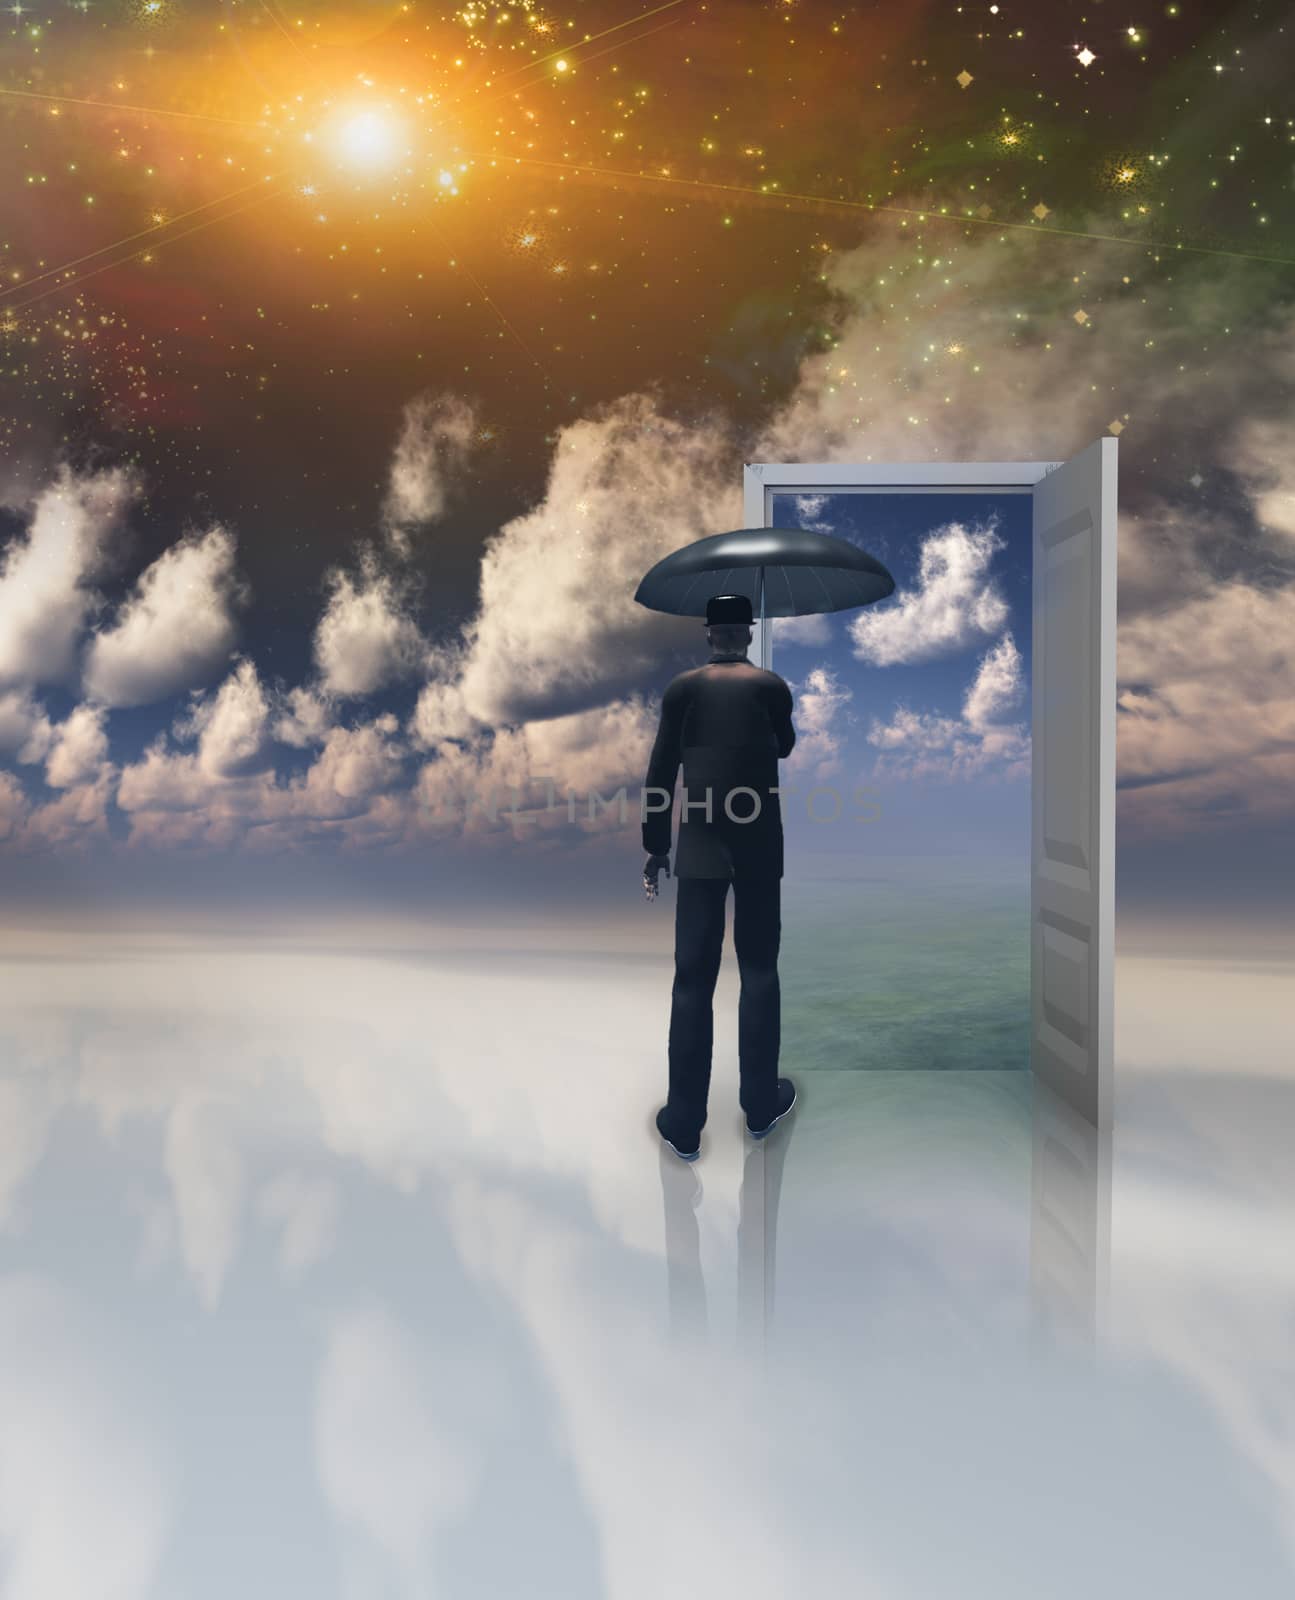 Sky fields of clouds. Opened door to another world. Man with umbrella stands before the door.